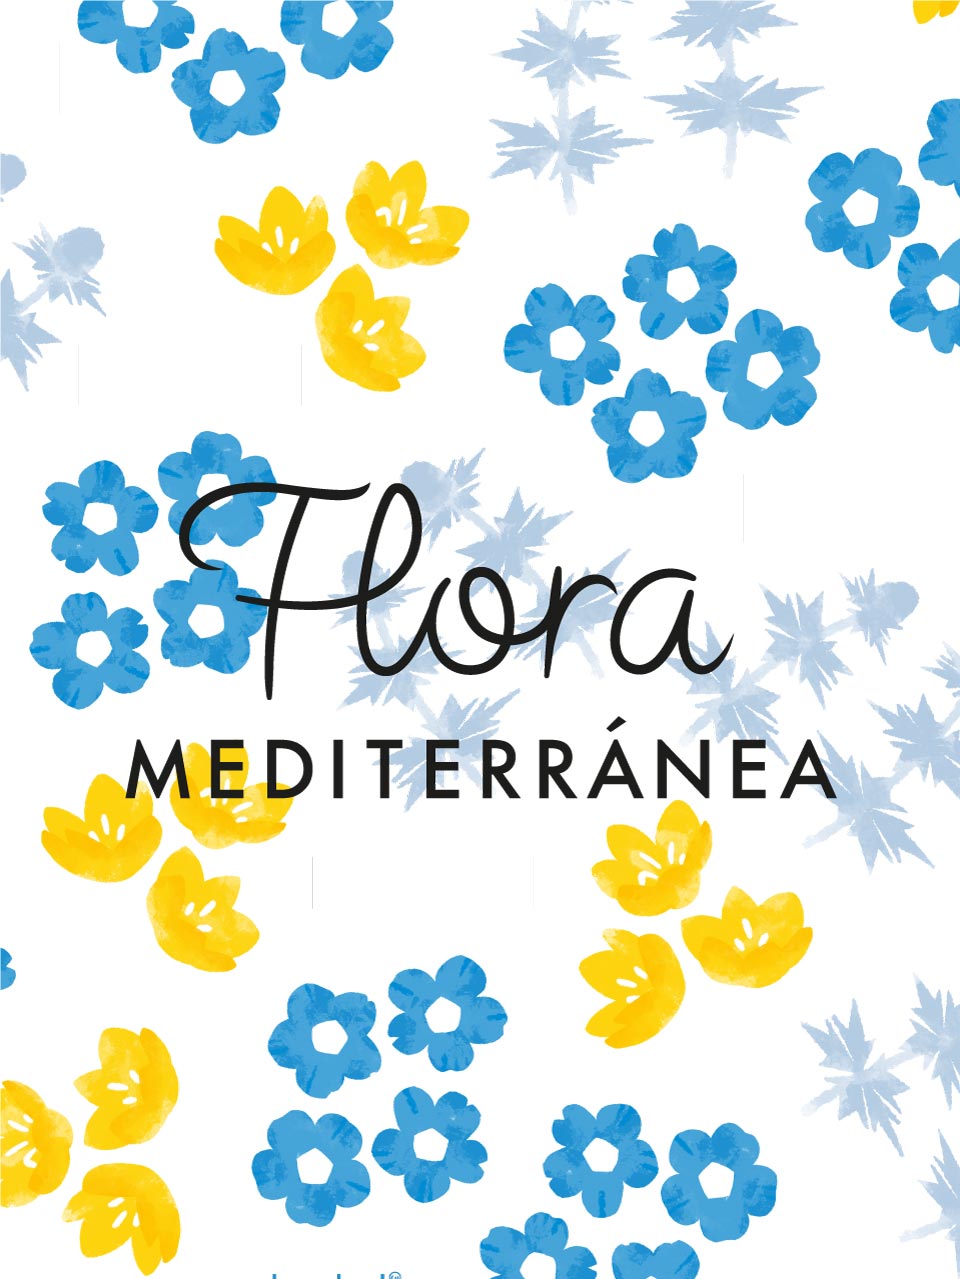 Sort-of Solids: Flora Mediterránea